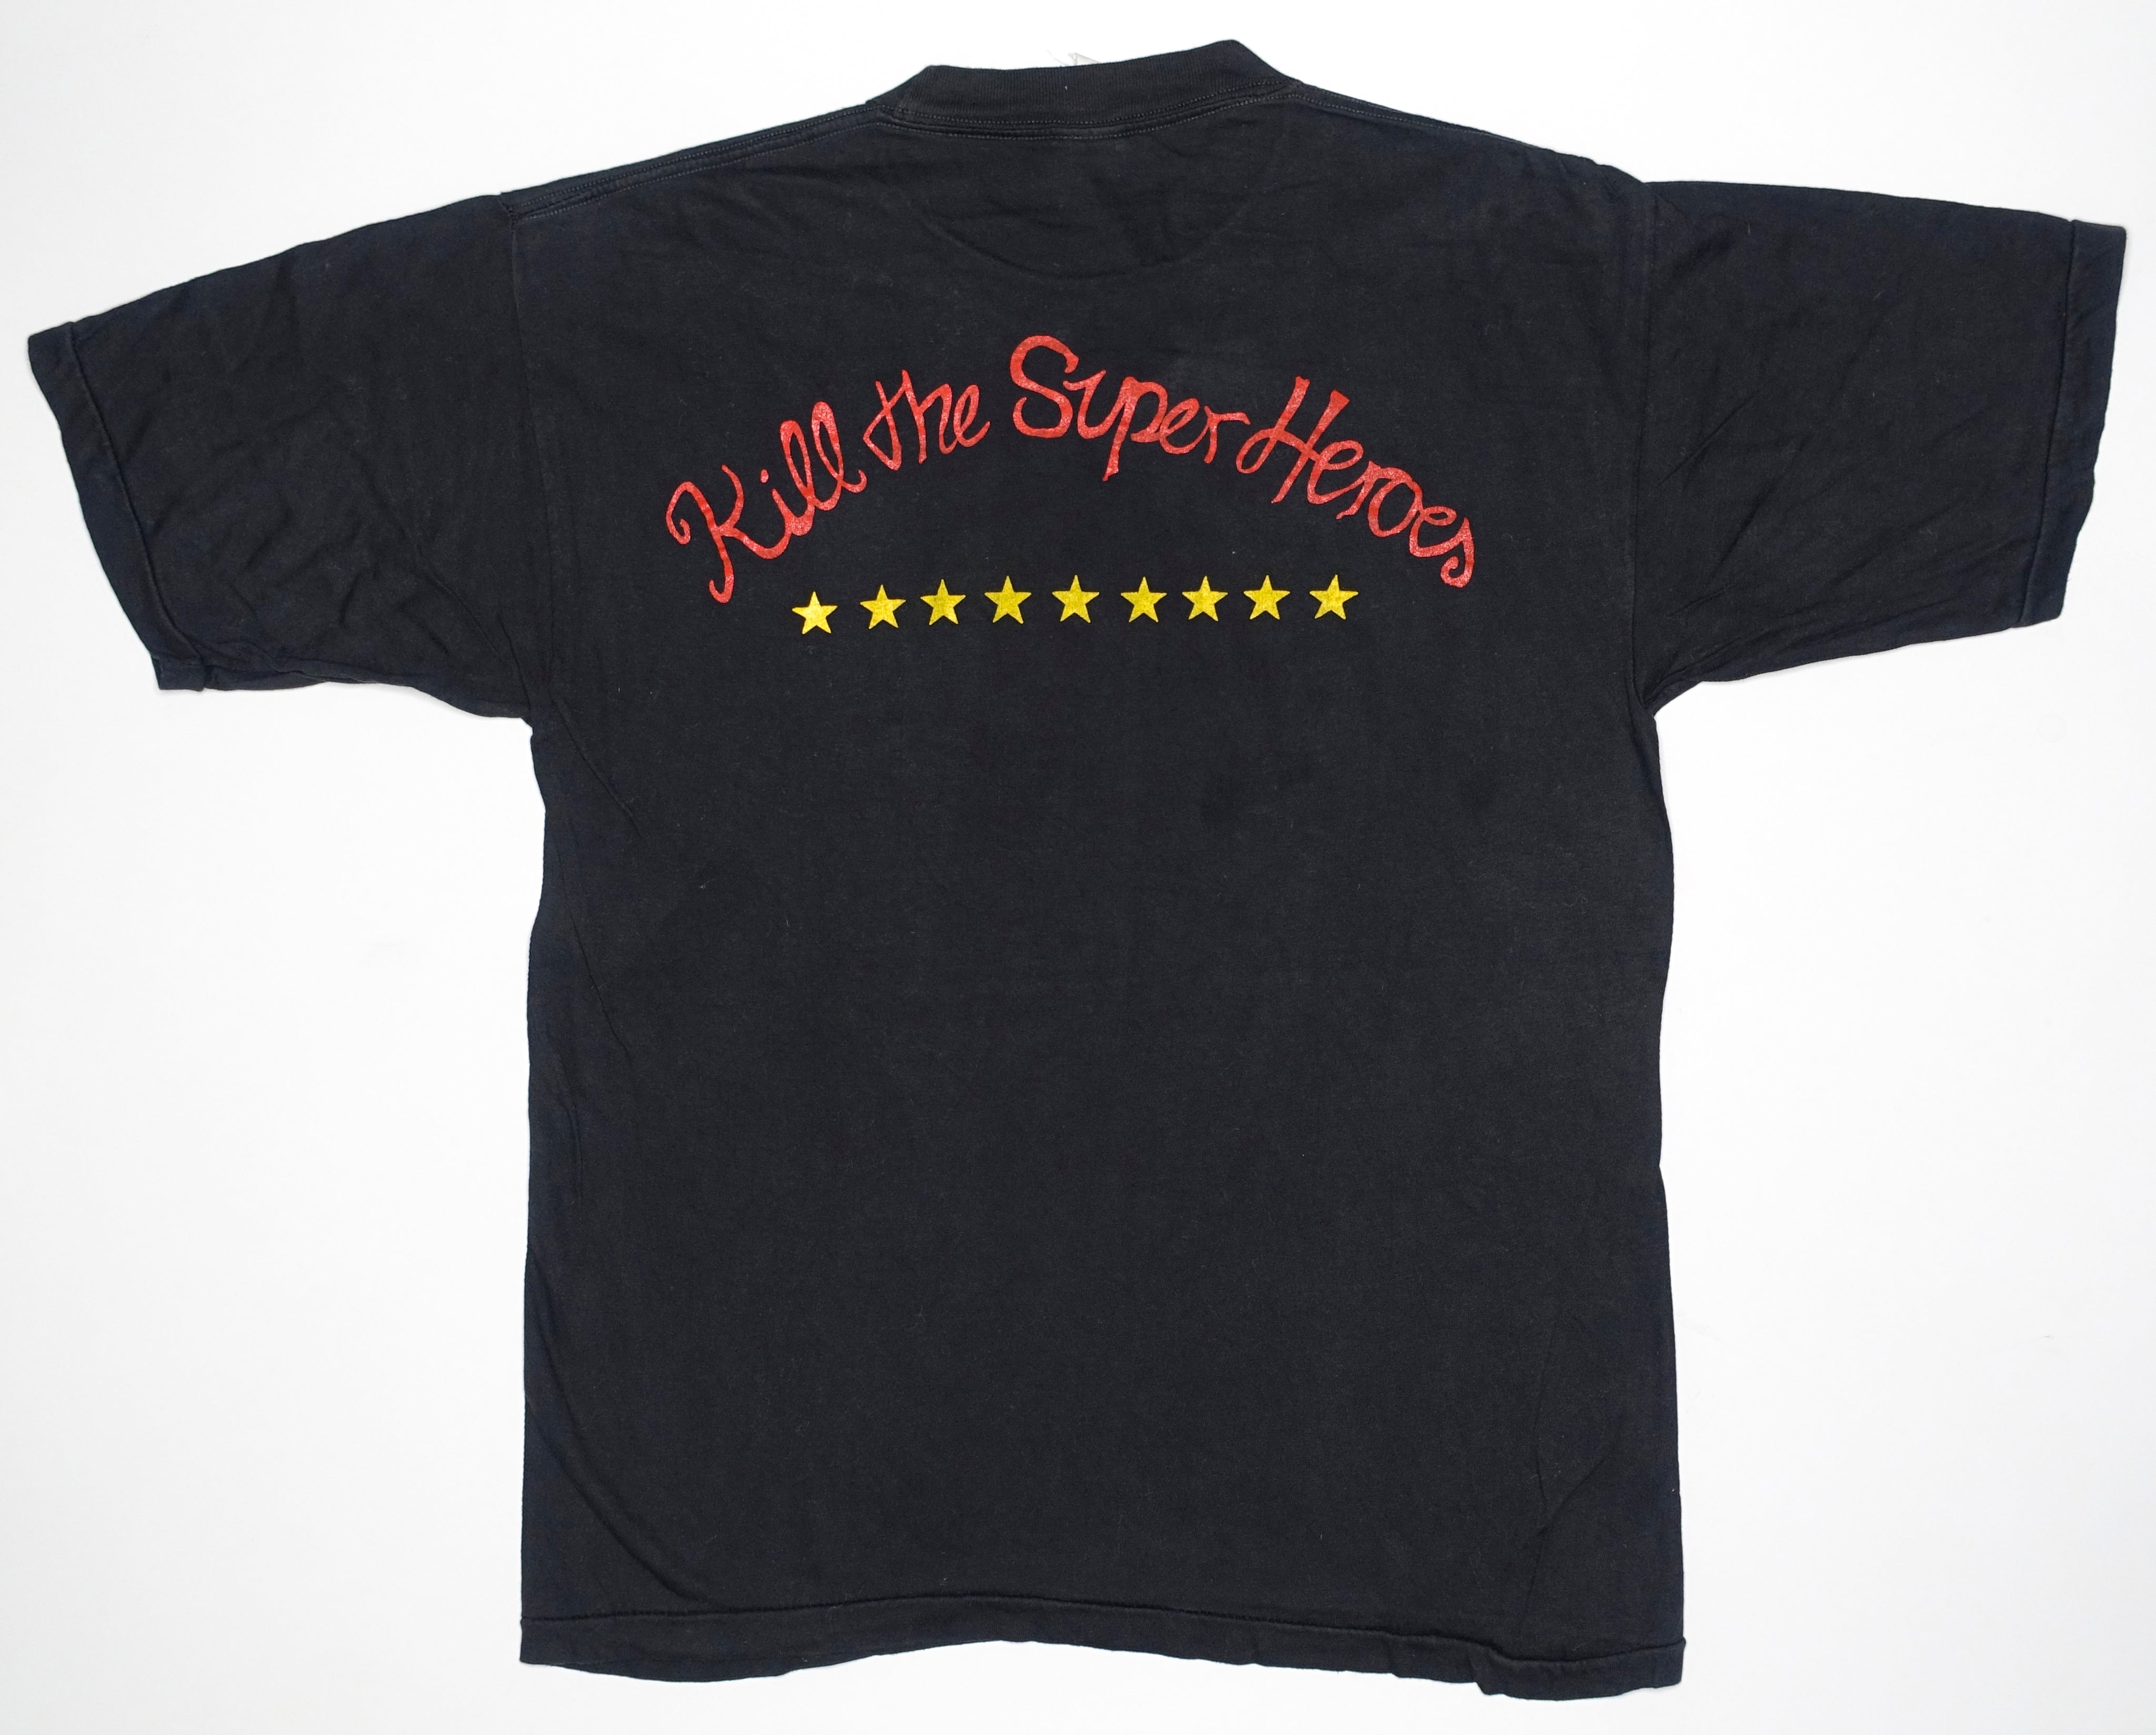 Swervedriver - Kill The Superheroes 1990 Tour Shirt Size Large